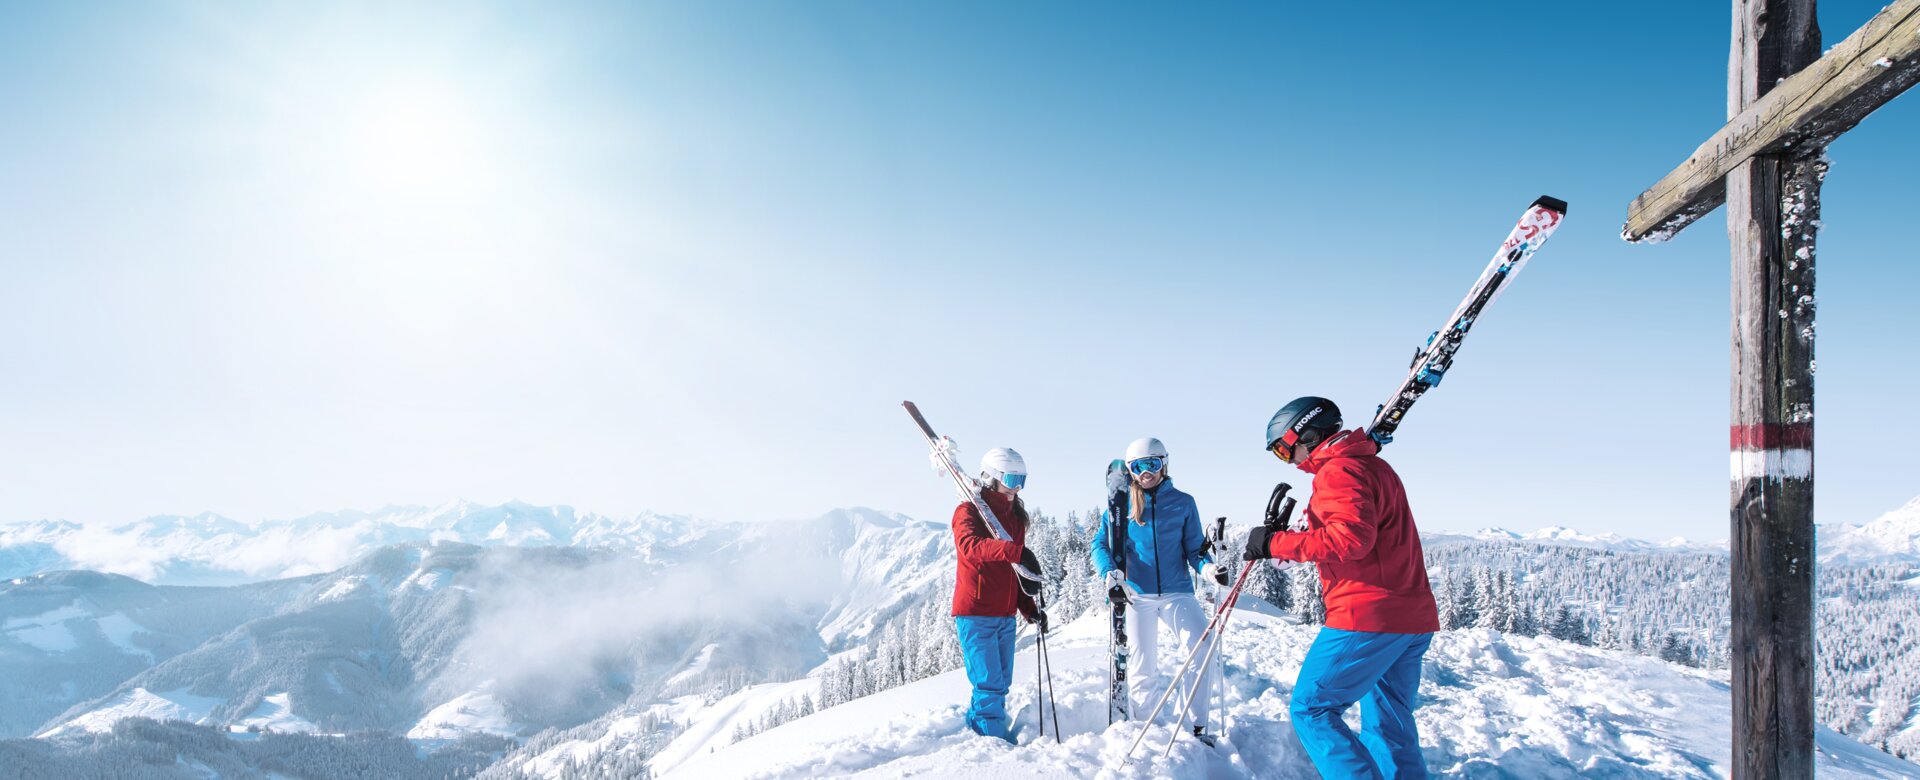 Skirouten bieten viele Optionen zum Freeriden in Ski amadé